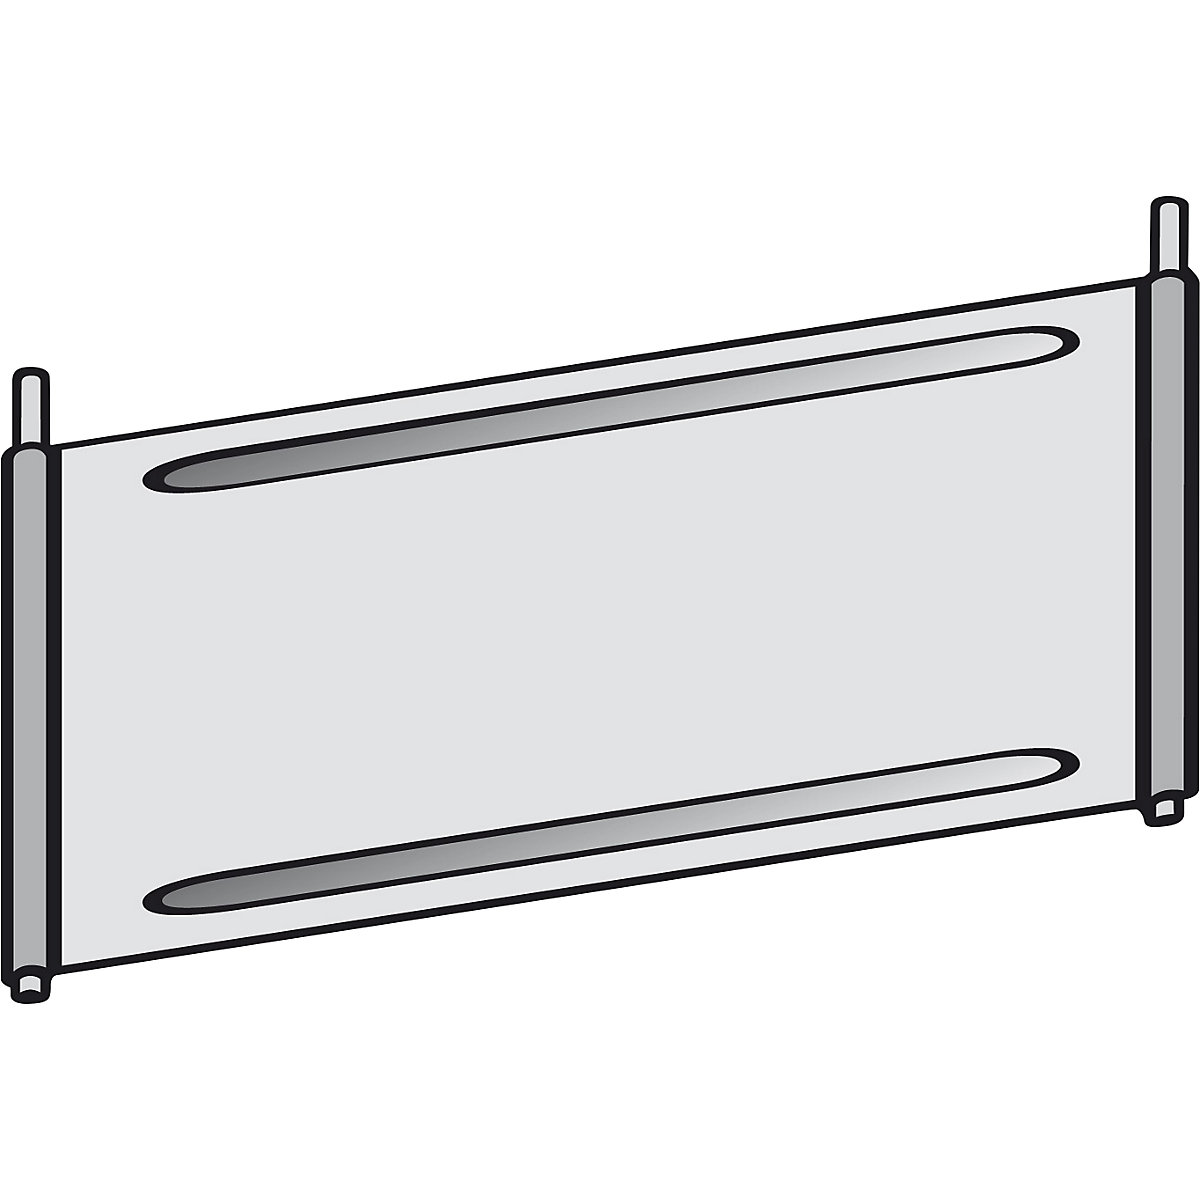 Chapa separadora para estante de compartimentos – hofe